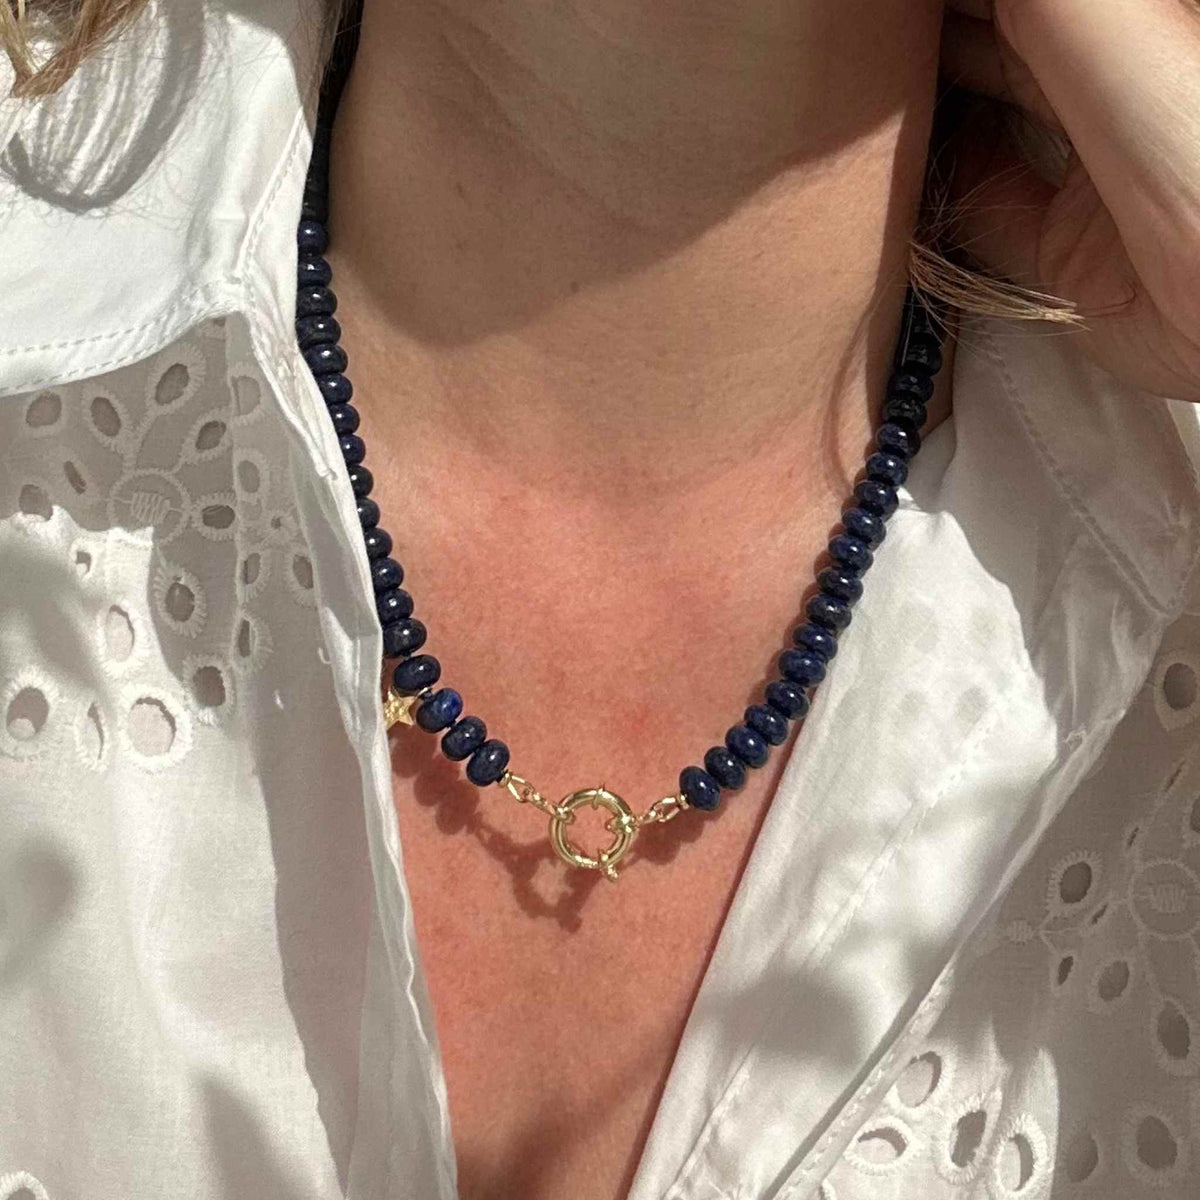 Lapis Lazuli necklace beaded modelled against a white dress